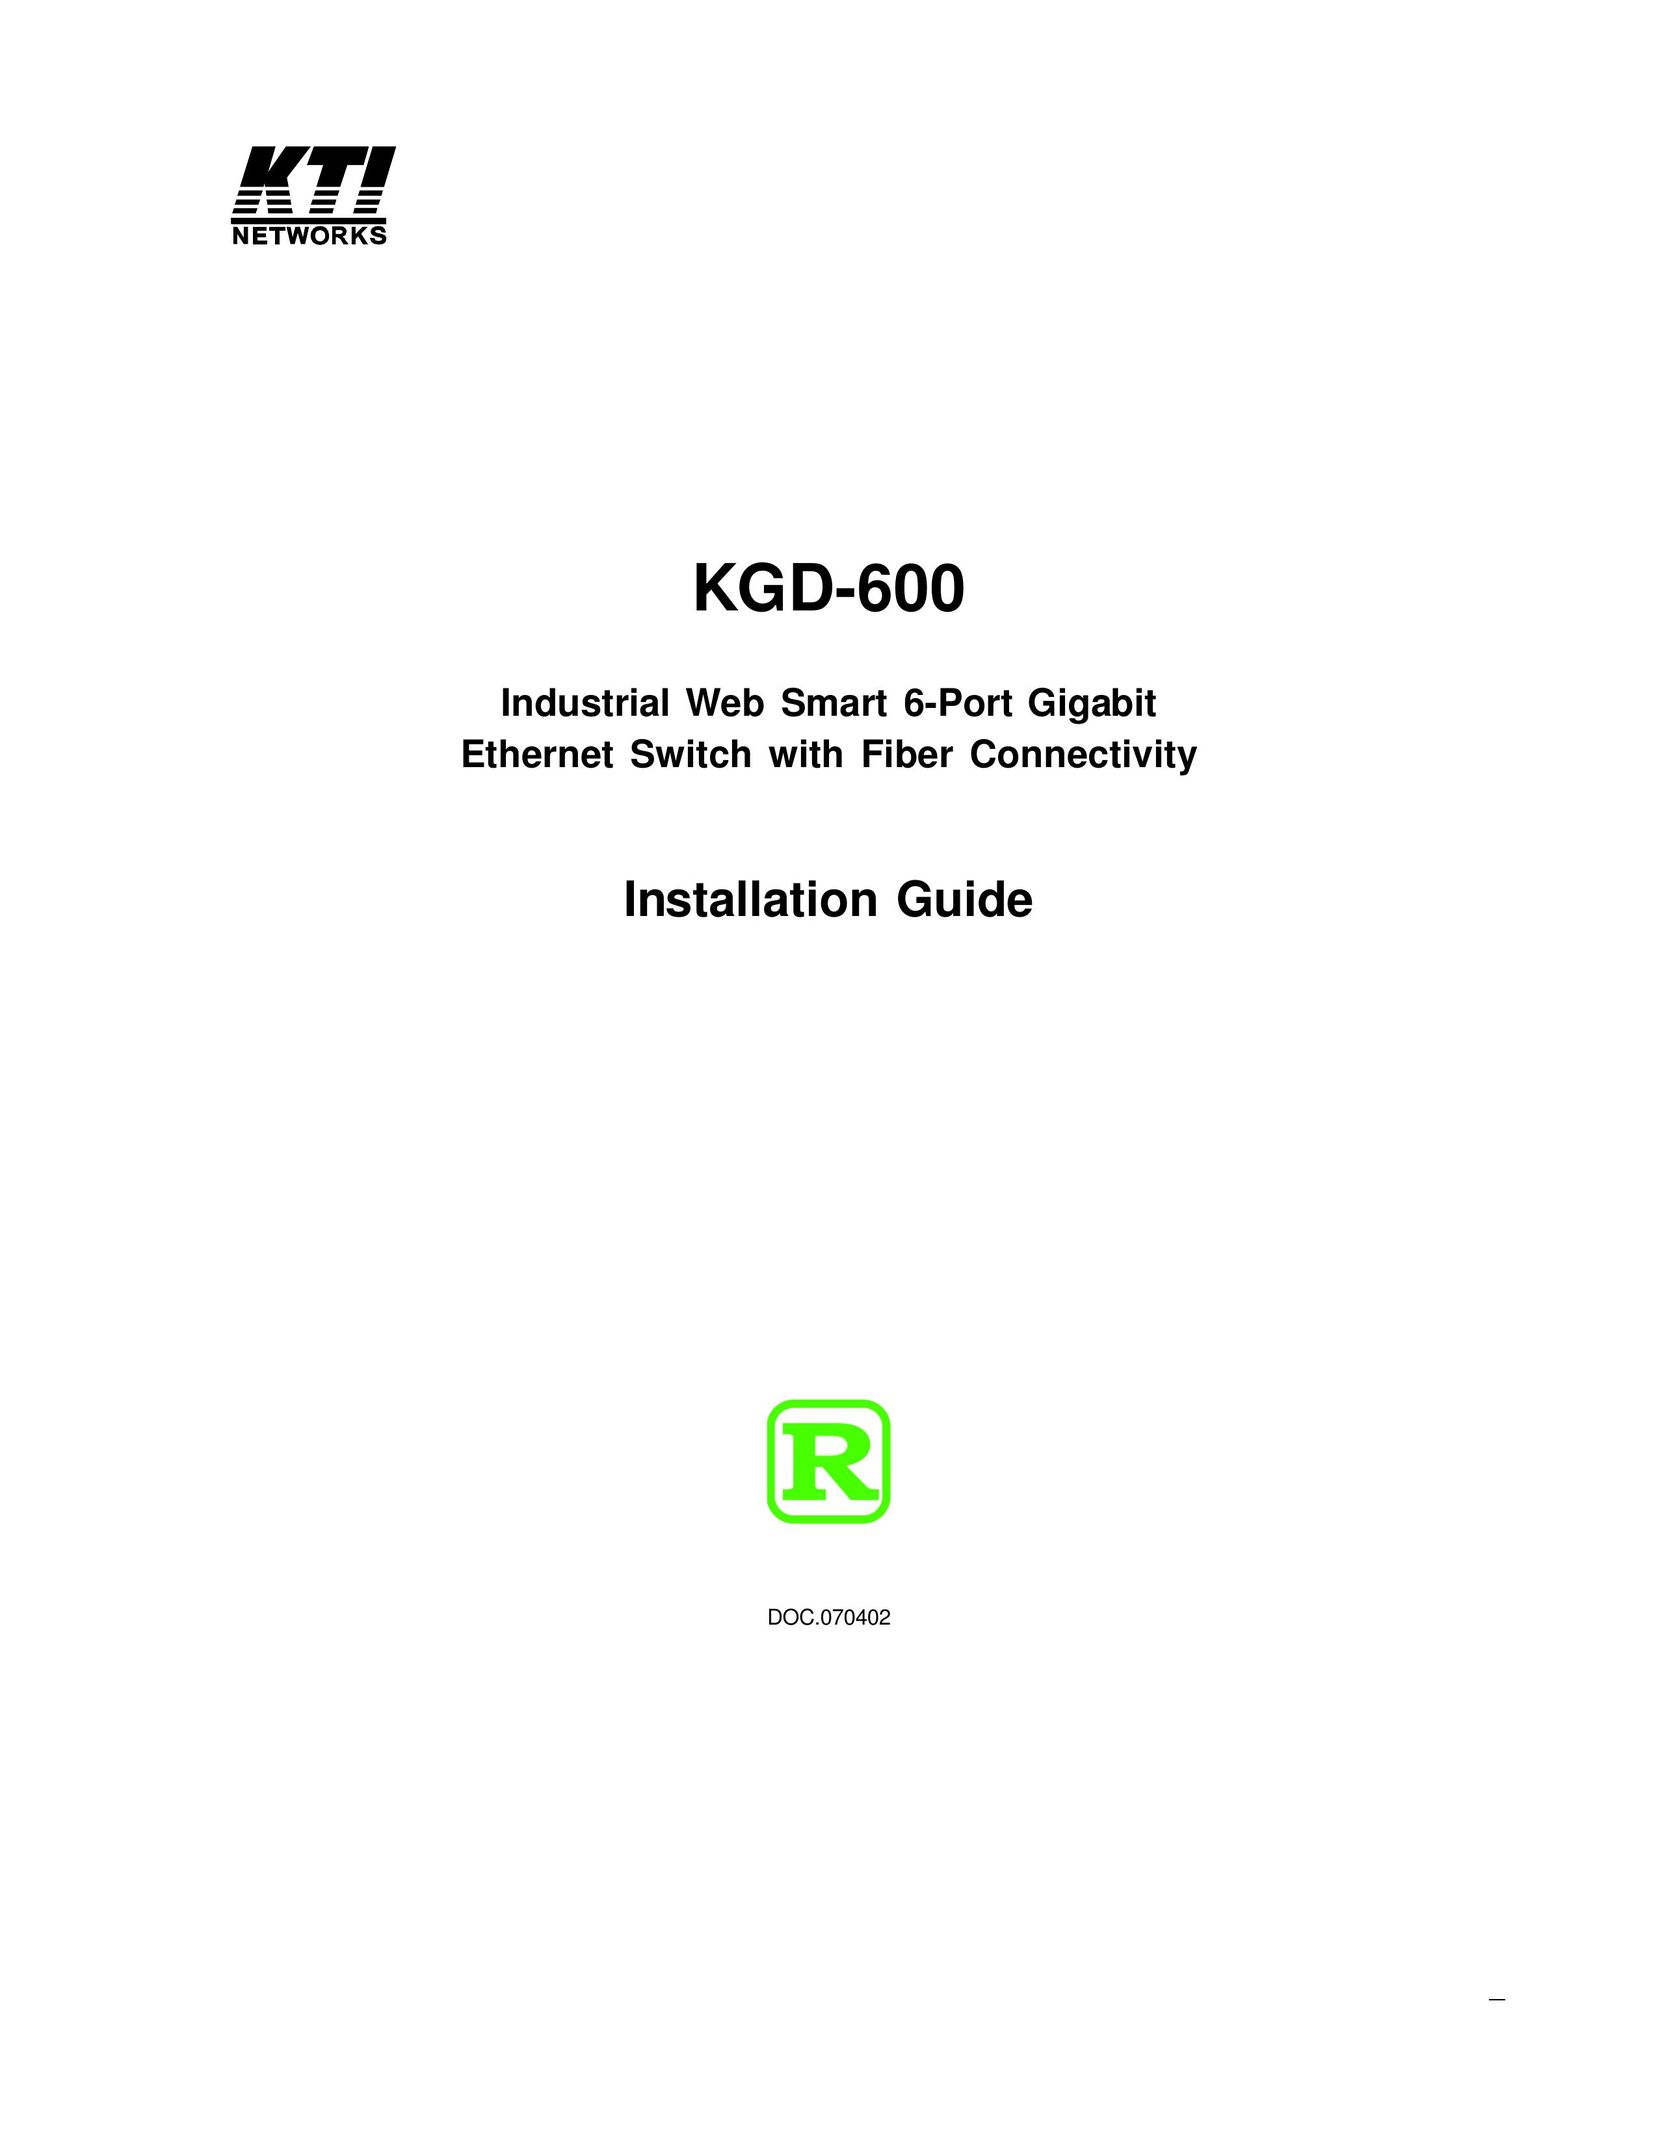 KTI Networks KGD-600 Switch User Manual